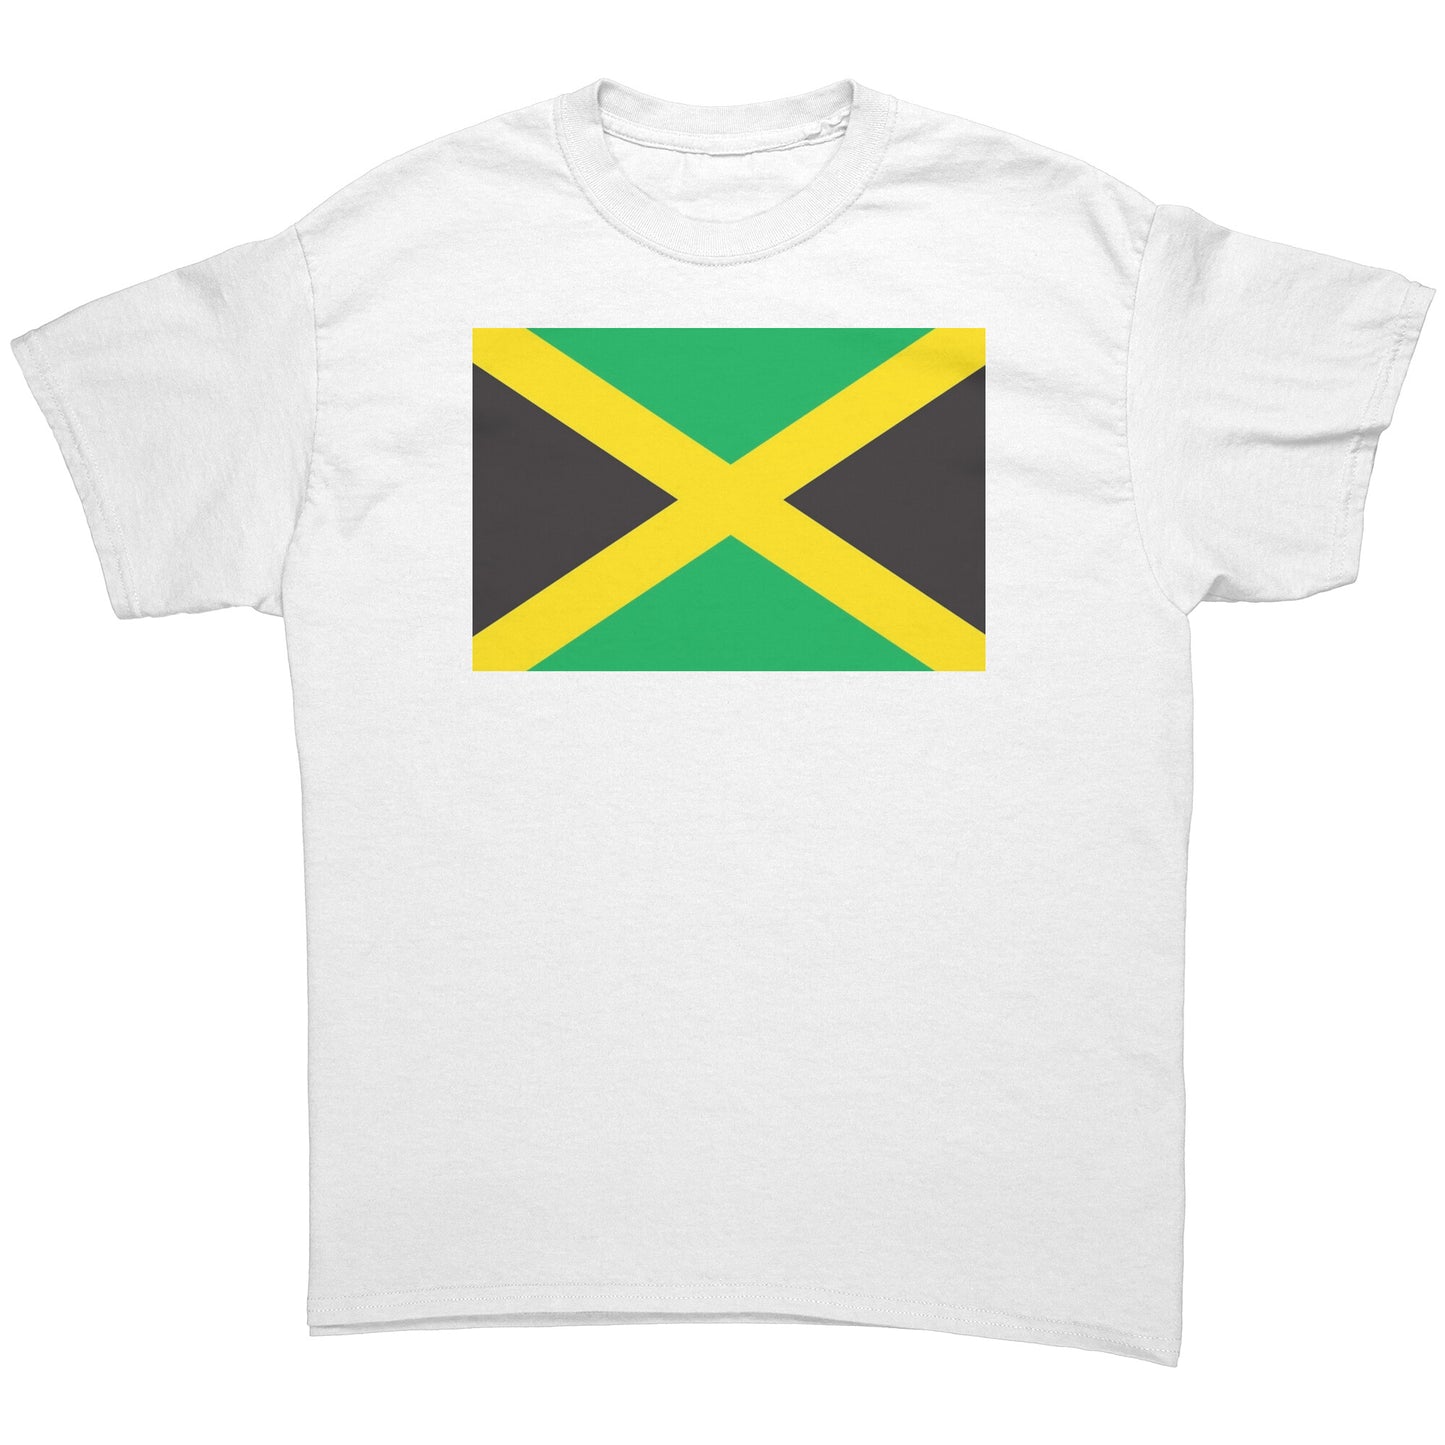 The flag of Jamaica